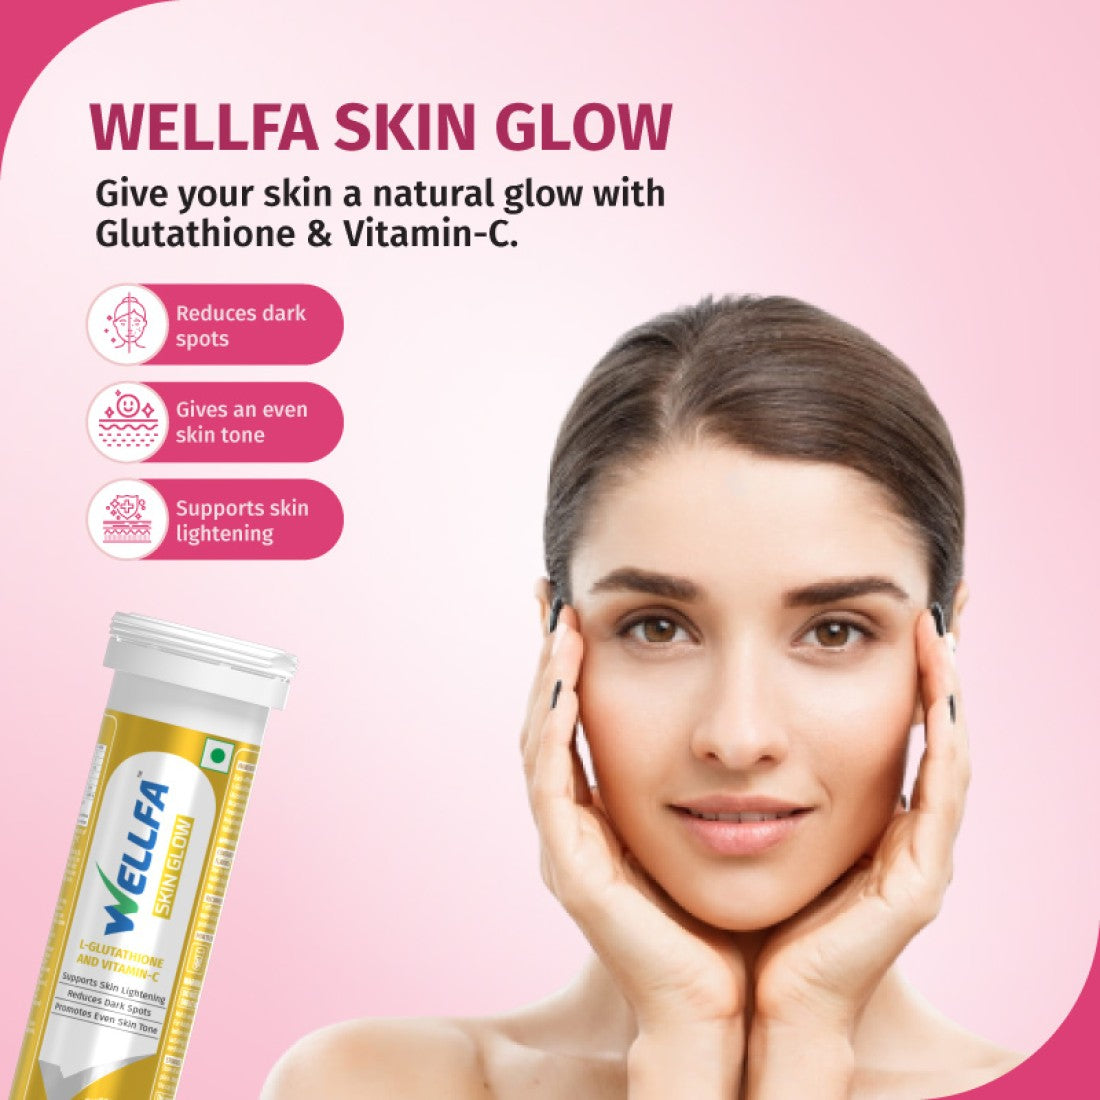 Wellfa Skin Glow, Give your Skin a natural glow with Glutathione & Vit C